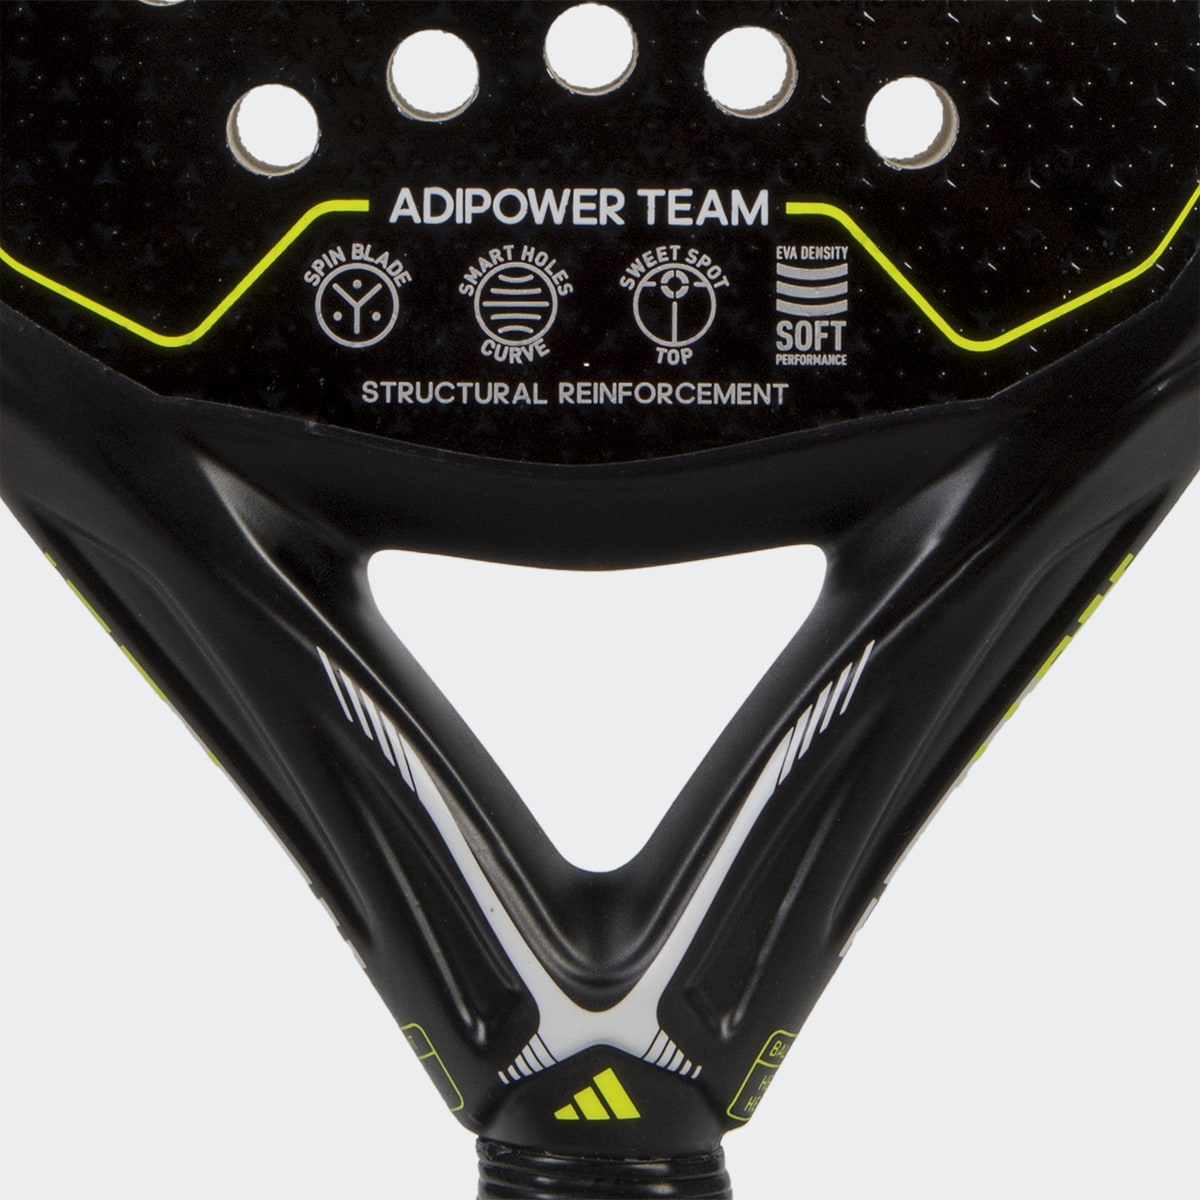 Adidas Adipower Team Padel Racket. 5